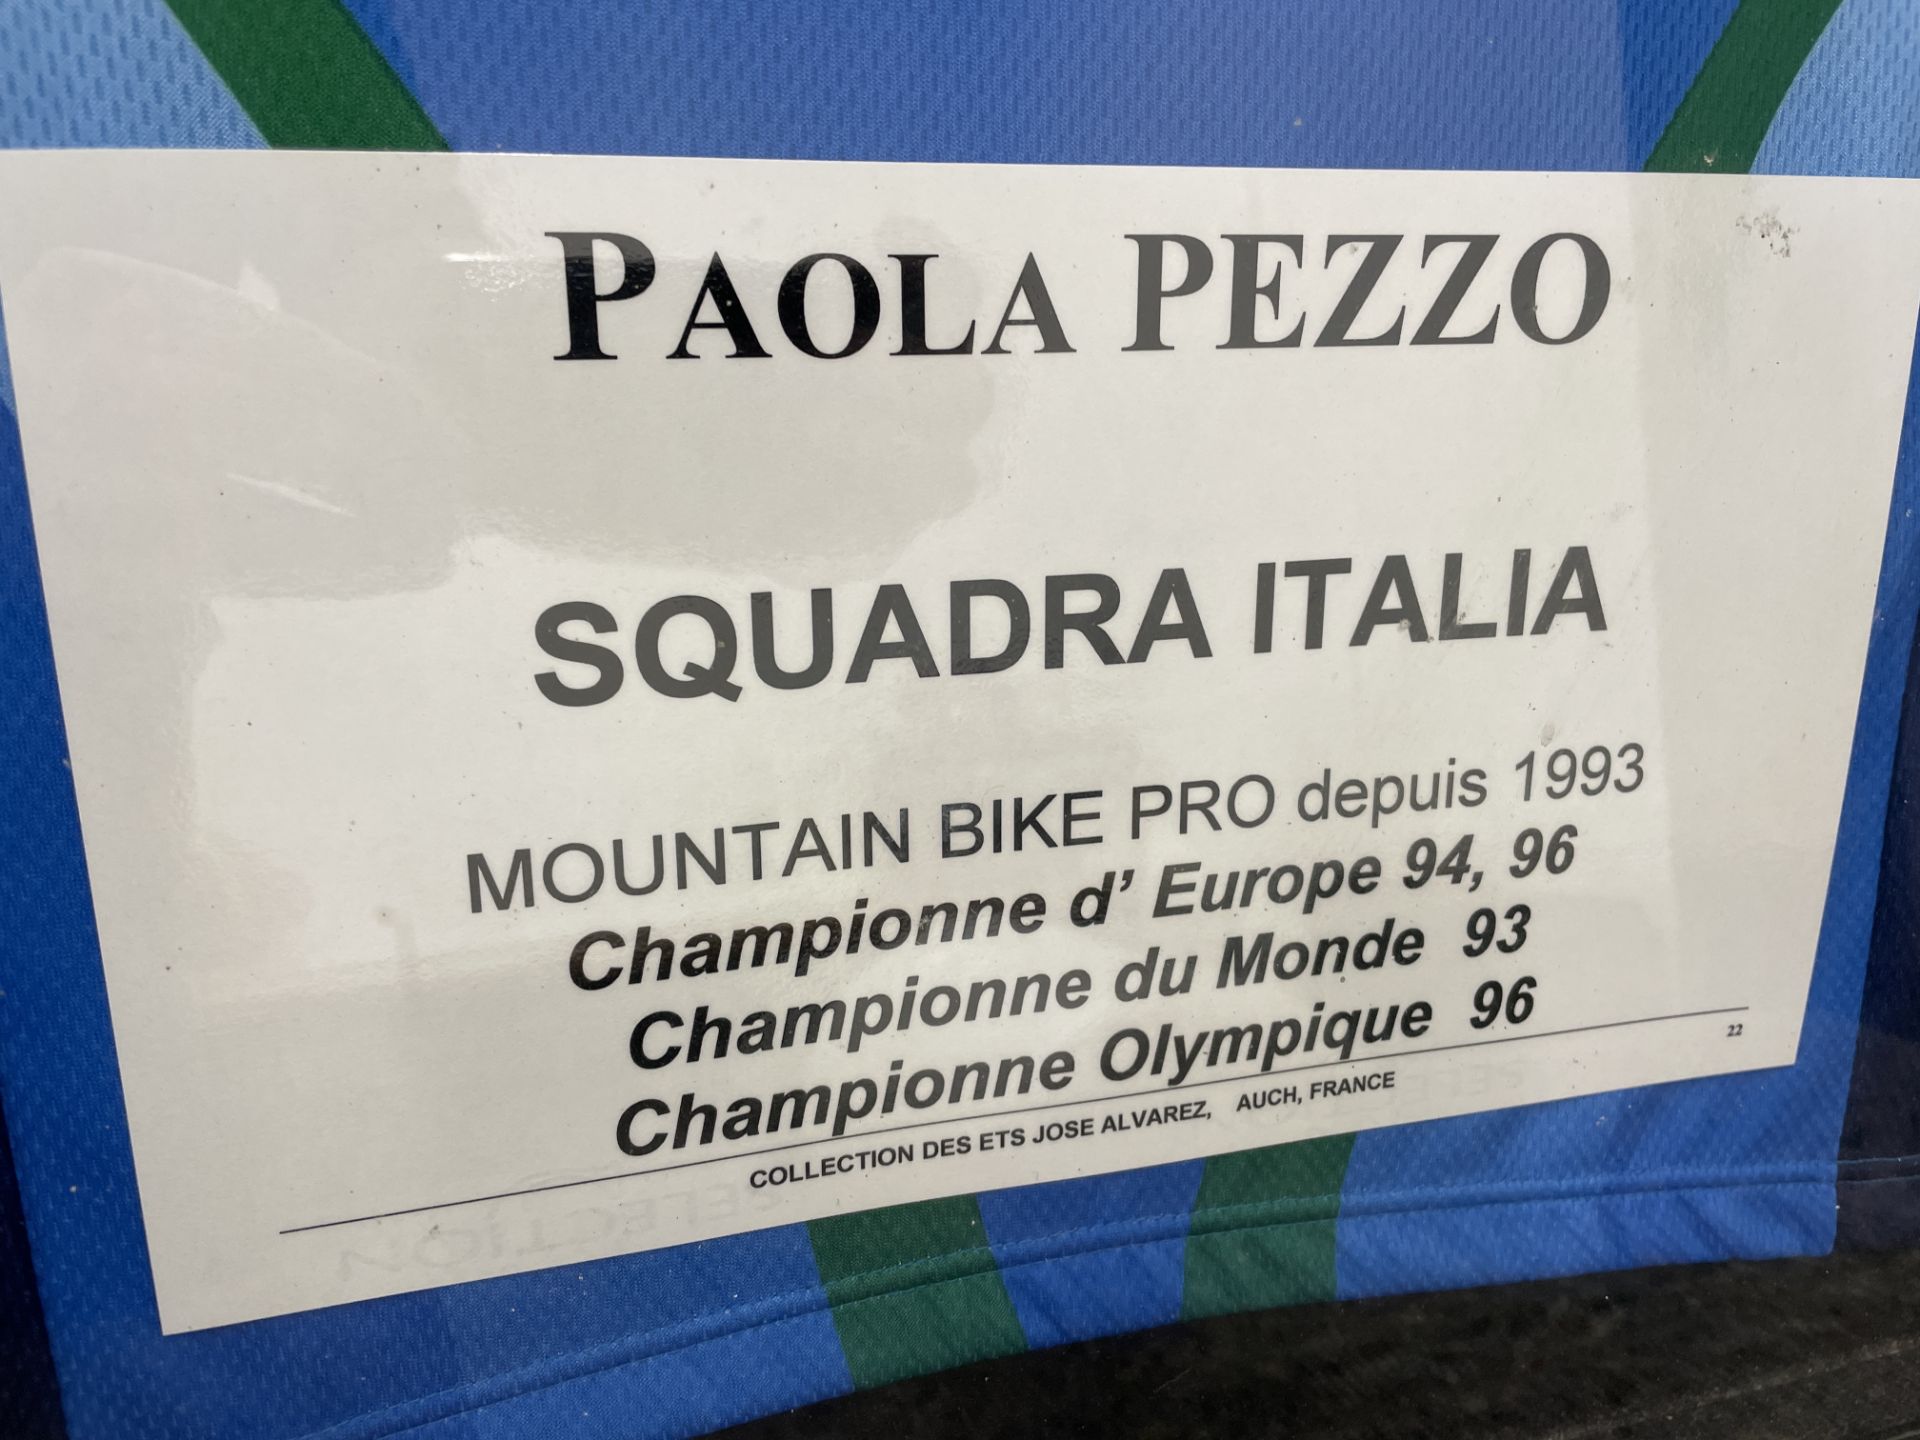 Paola Pezzo Framed & Signed Squadra Italia Jersey. Female Mountain Bike Champion of Europe 1994 & 95 - Image 3 of 3